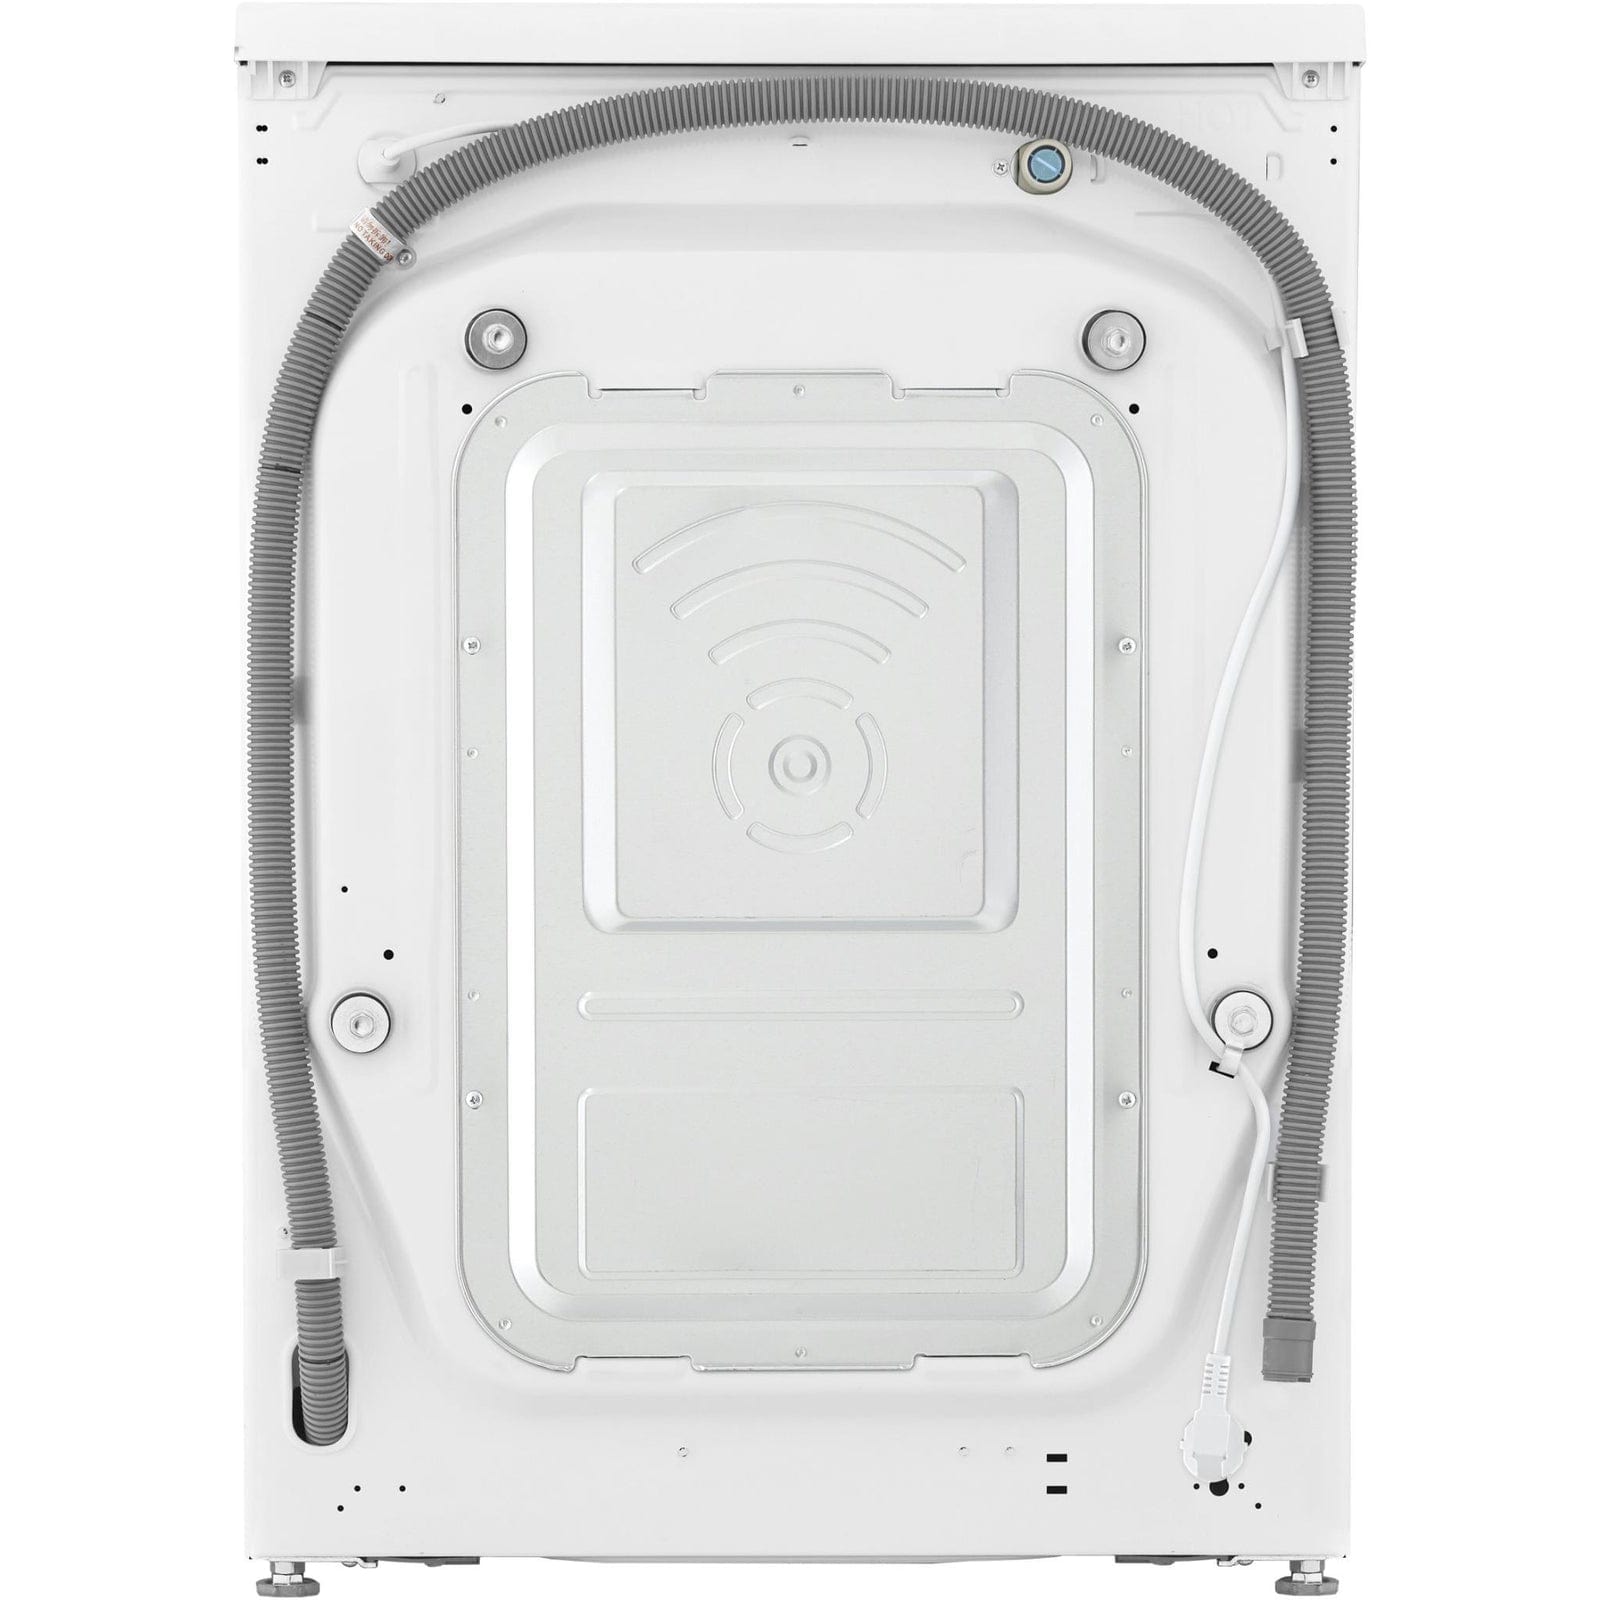 LG 9kg Autodose Front Load Washing Machine (White)